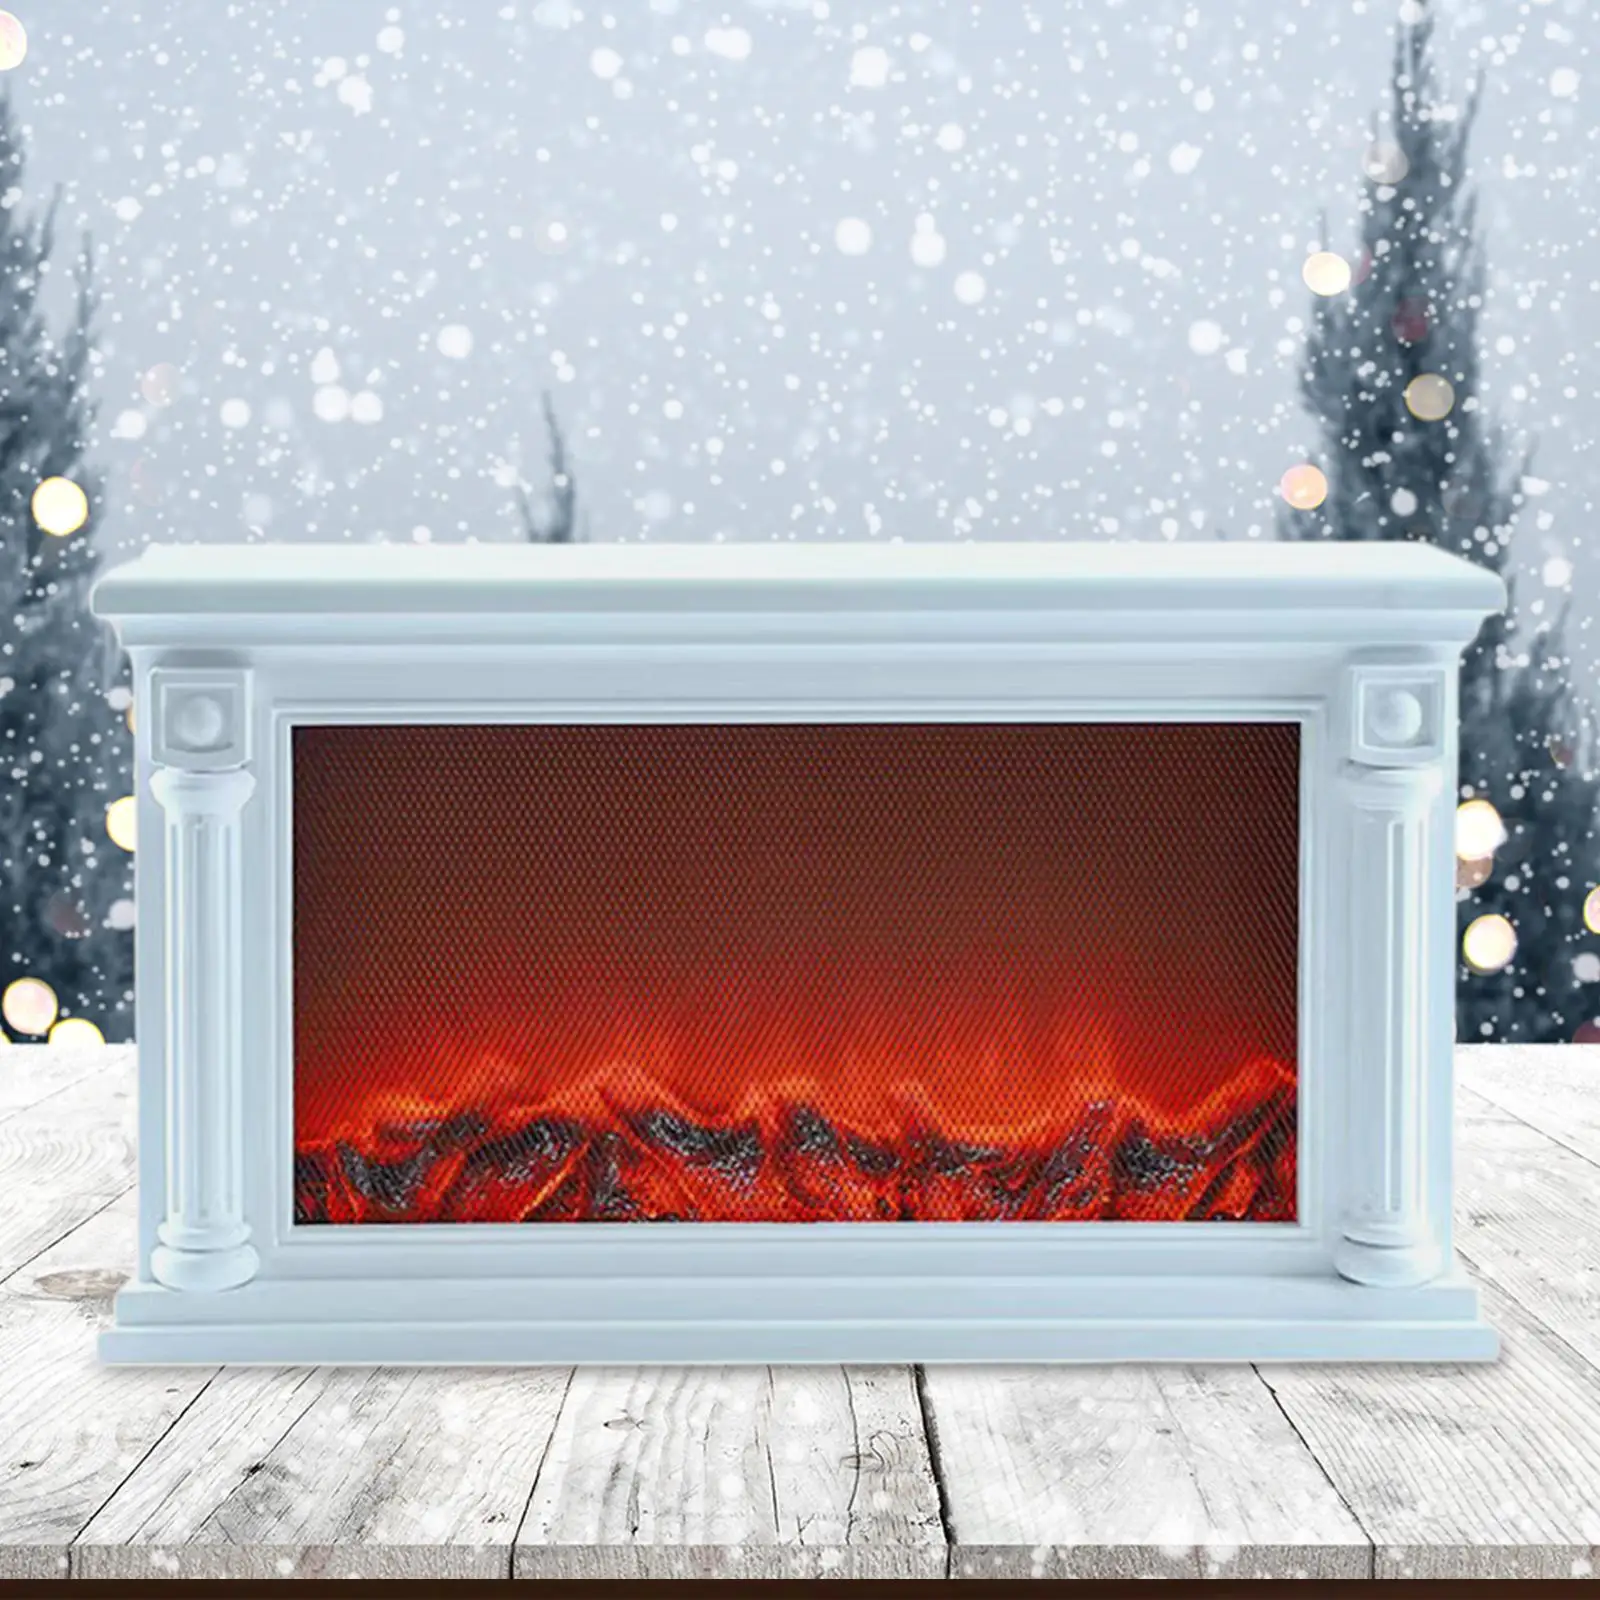 Simulation Fireplace Lamp Home Decor Decorative for Christmas Living Room